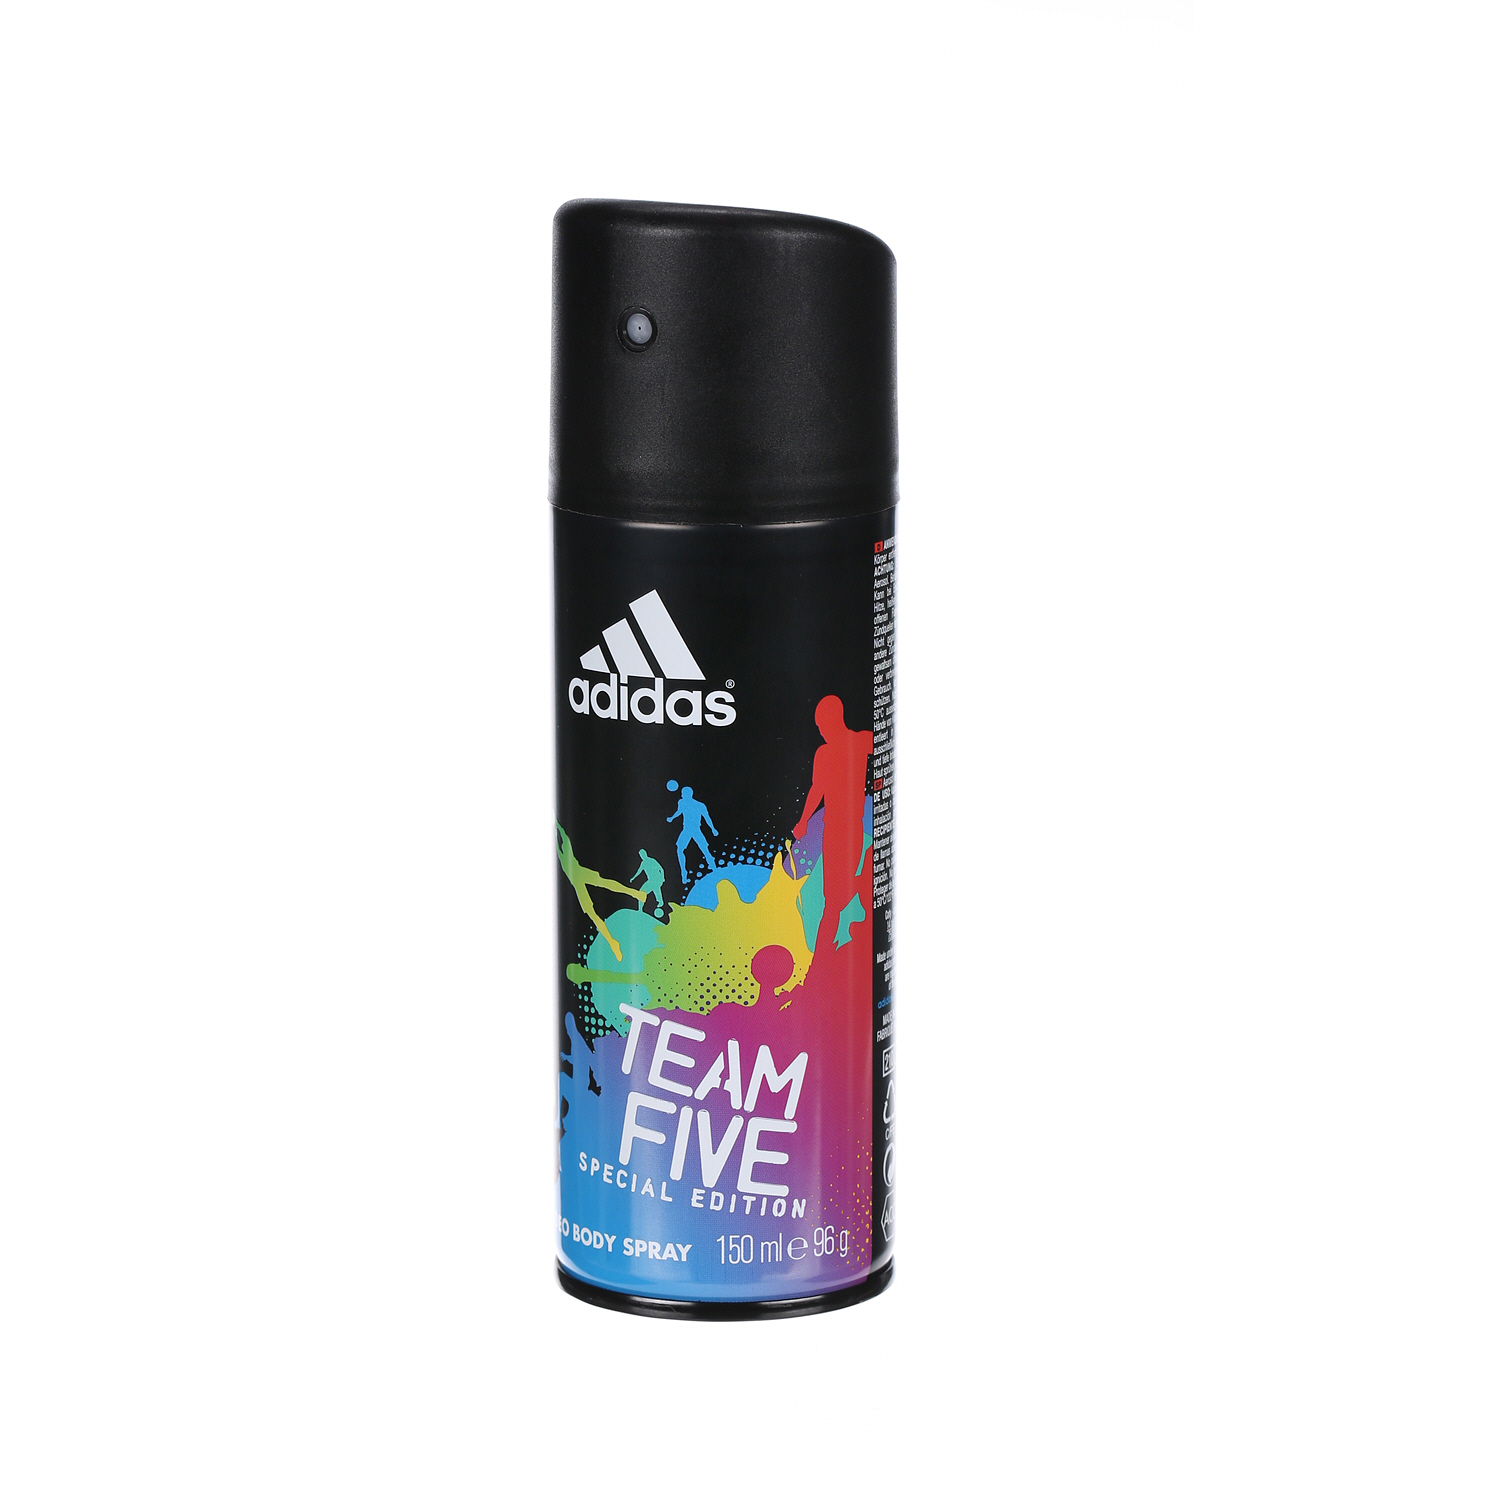 Adidas  Body Spray Teams Five 150ml